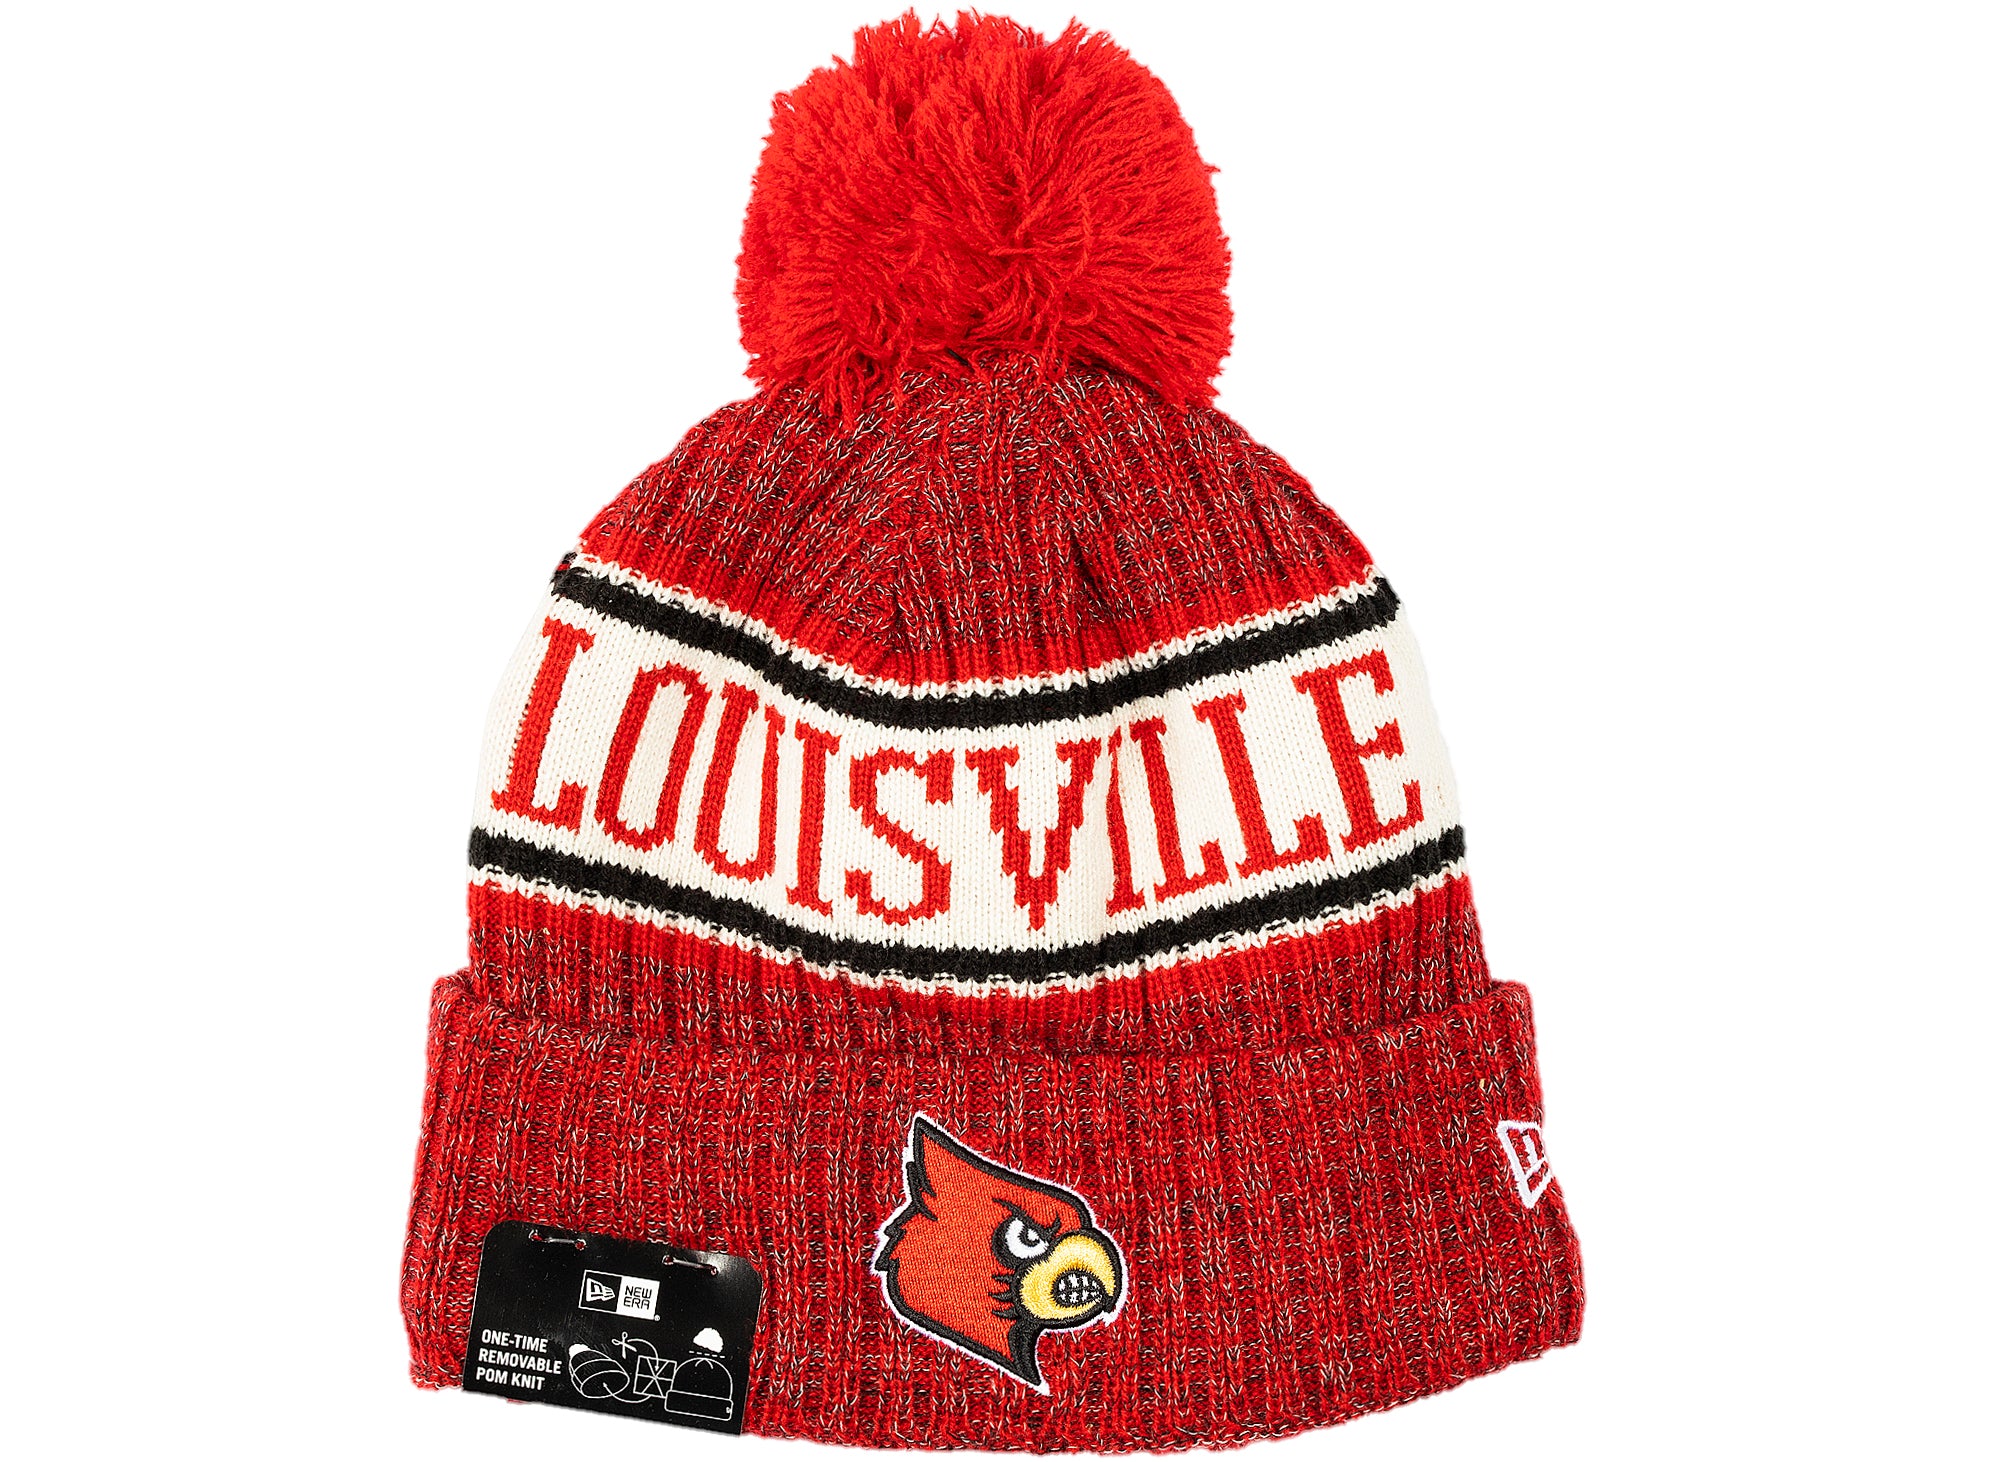 Louisville Cardinals New Era Sport Knit Hat with Pom